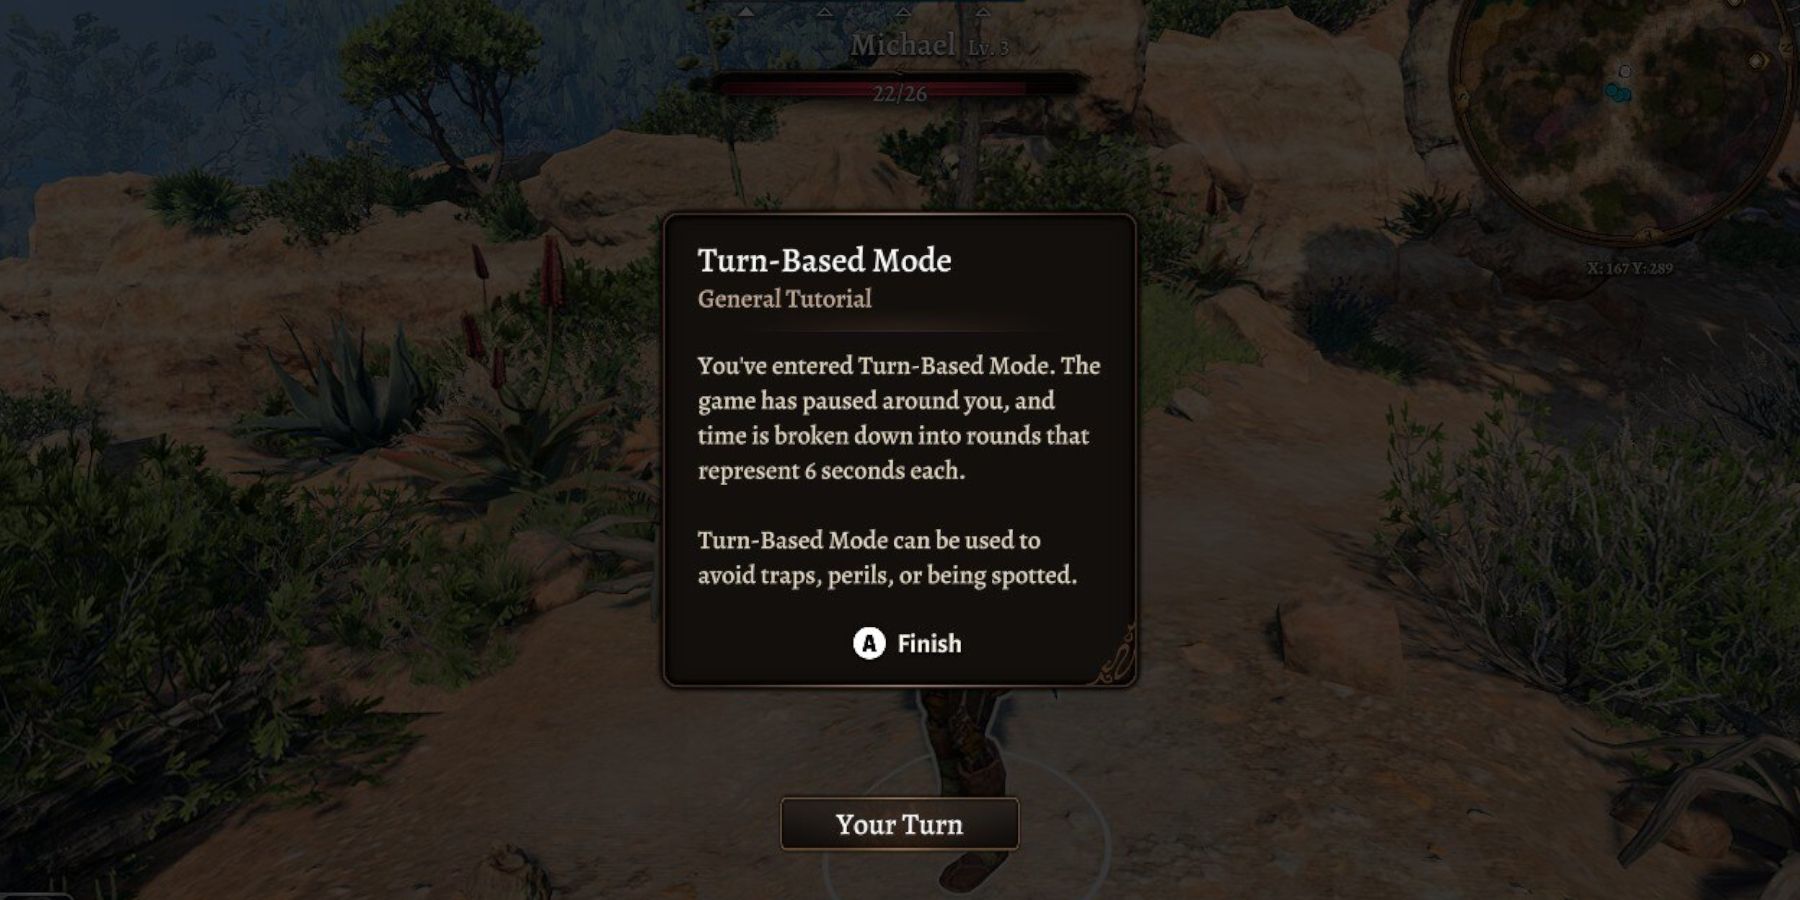 Baldur's Gate 3 switching to turn-based mode